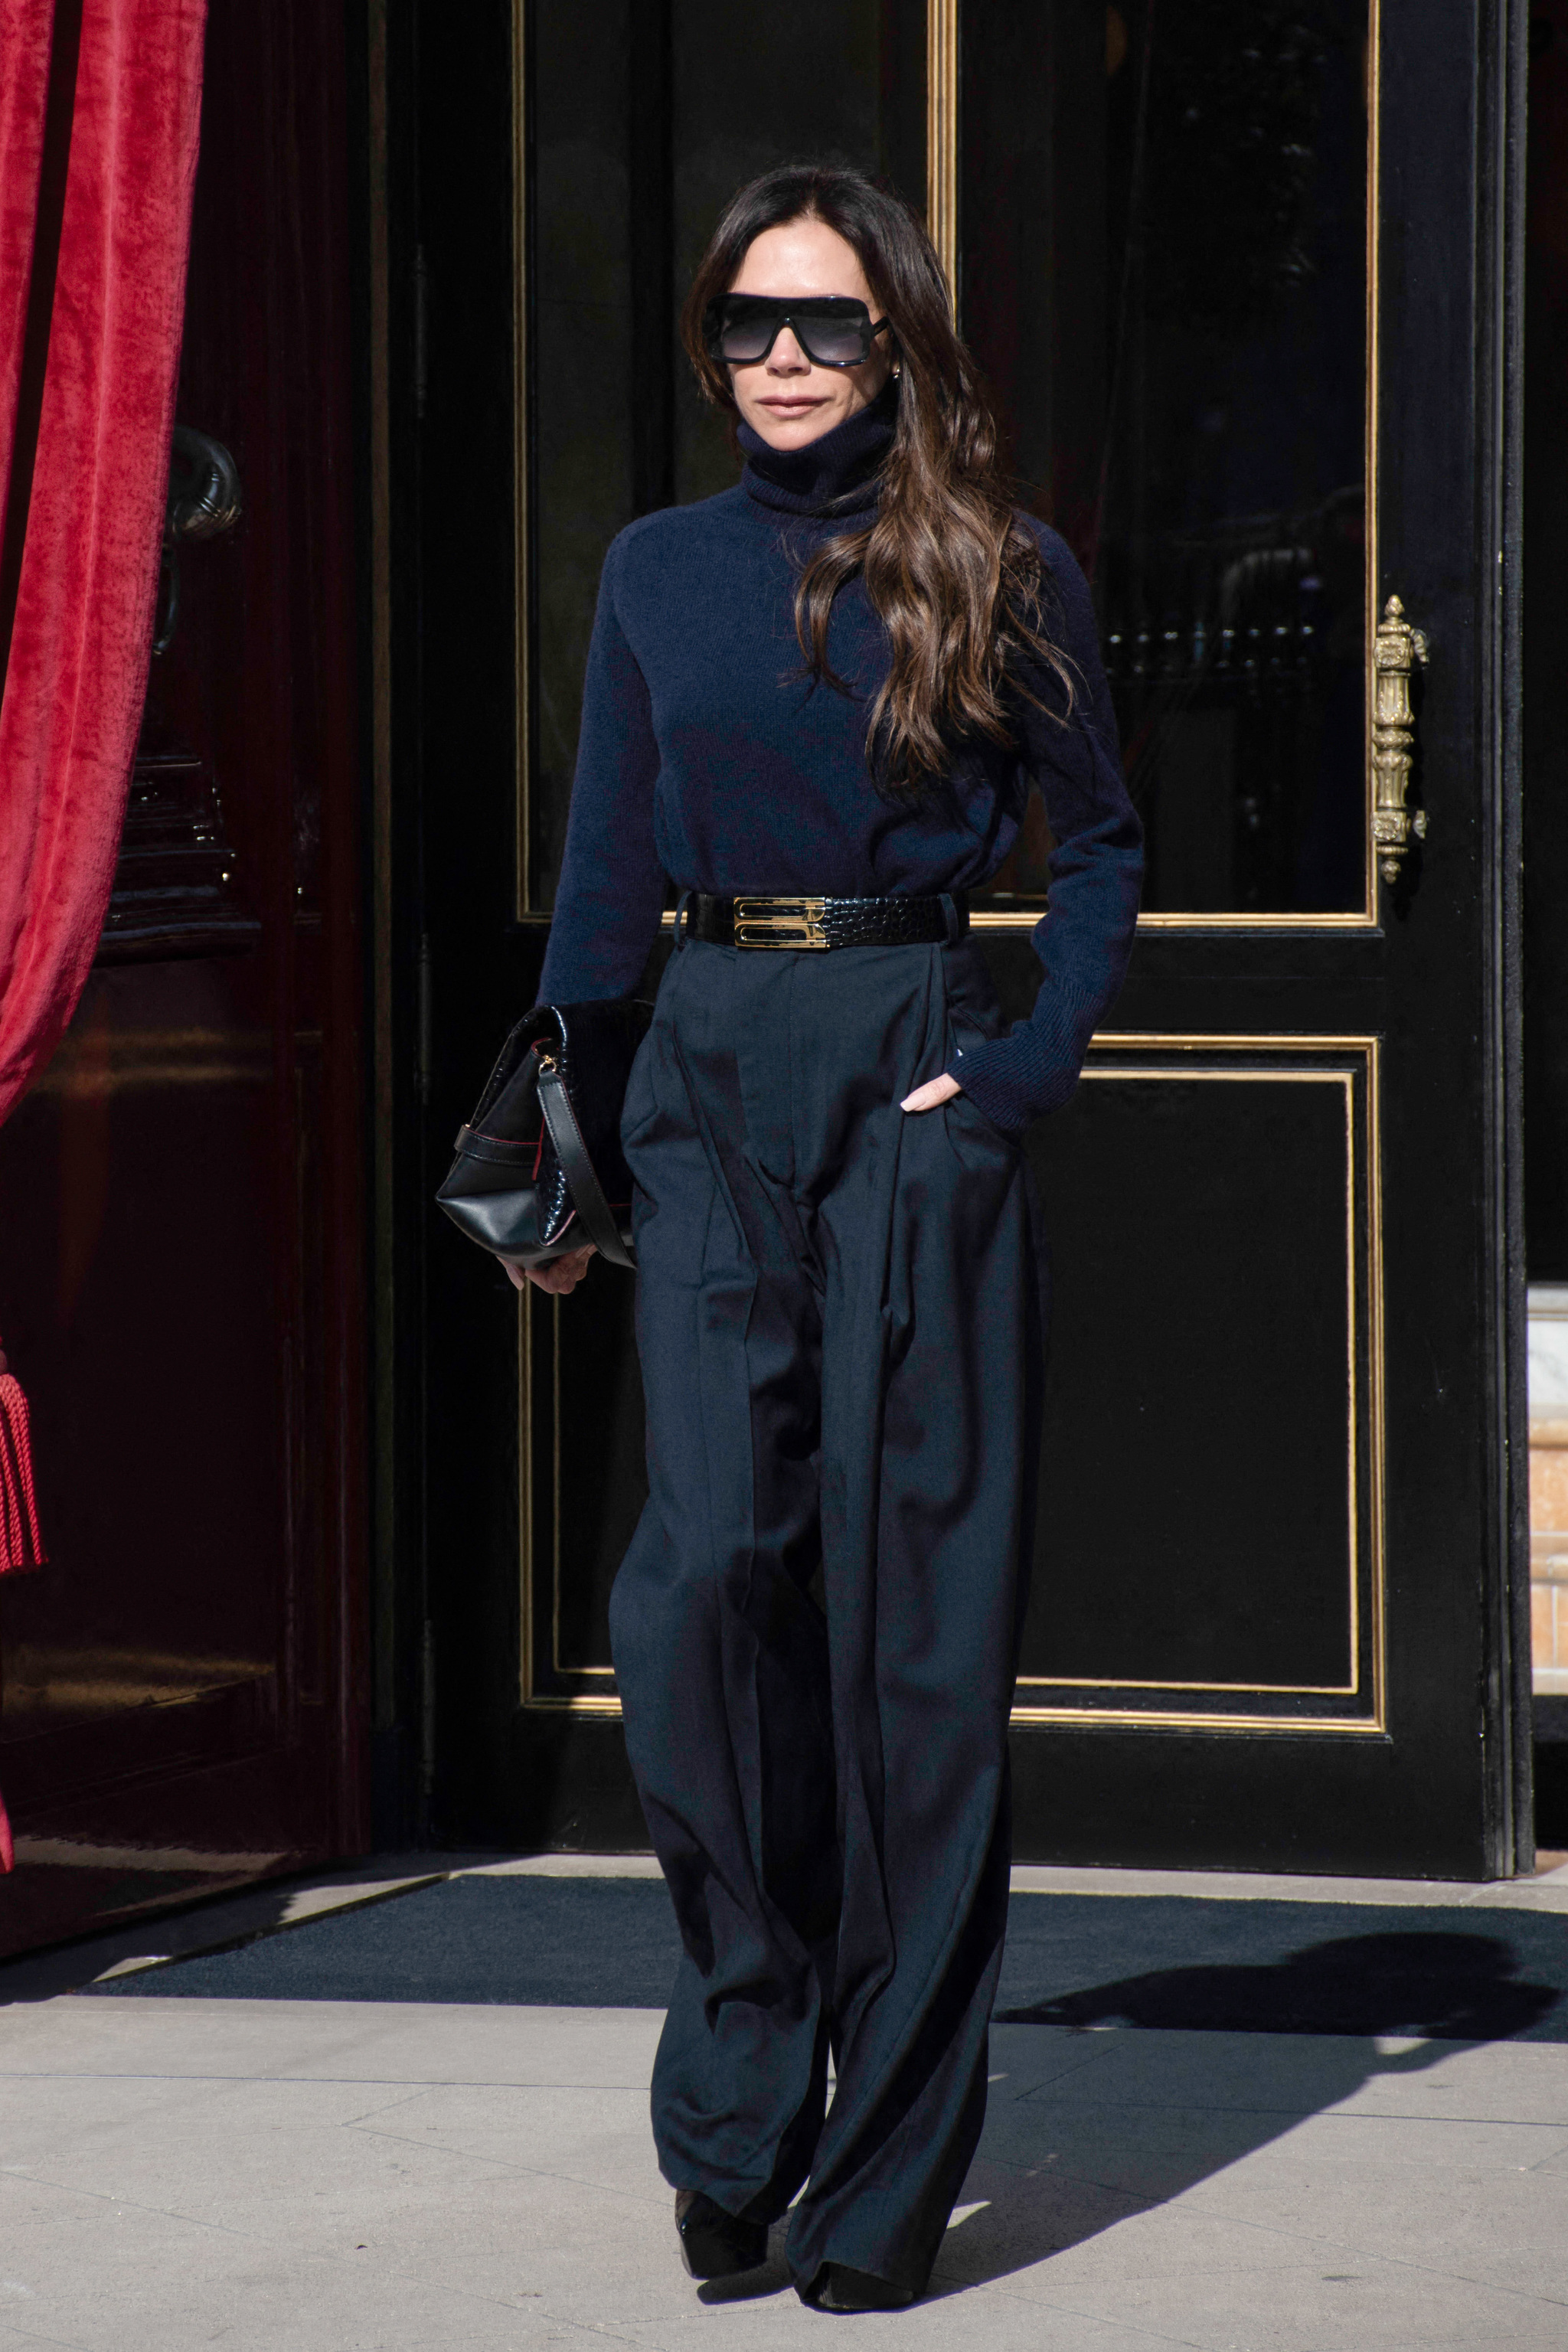 Victoria Bechkam con pantalón ancho y jersey de cuello vuelto azul marino en París.